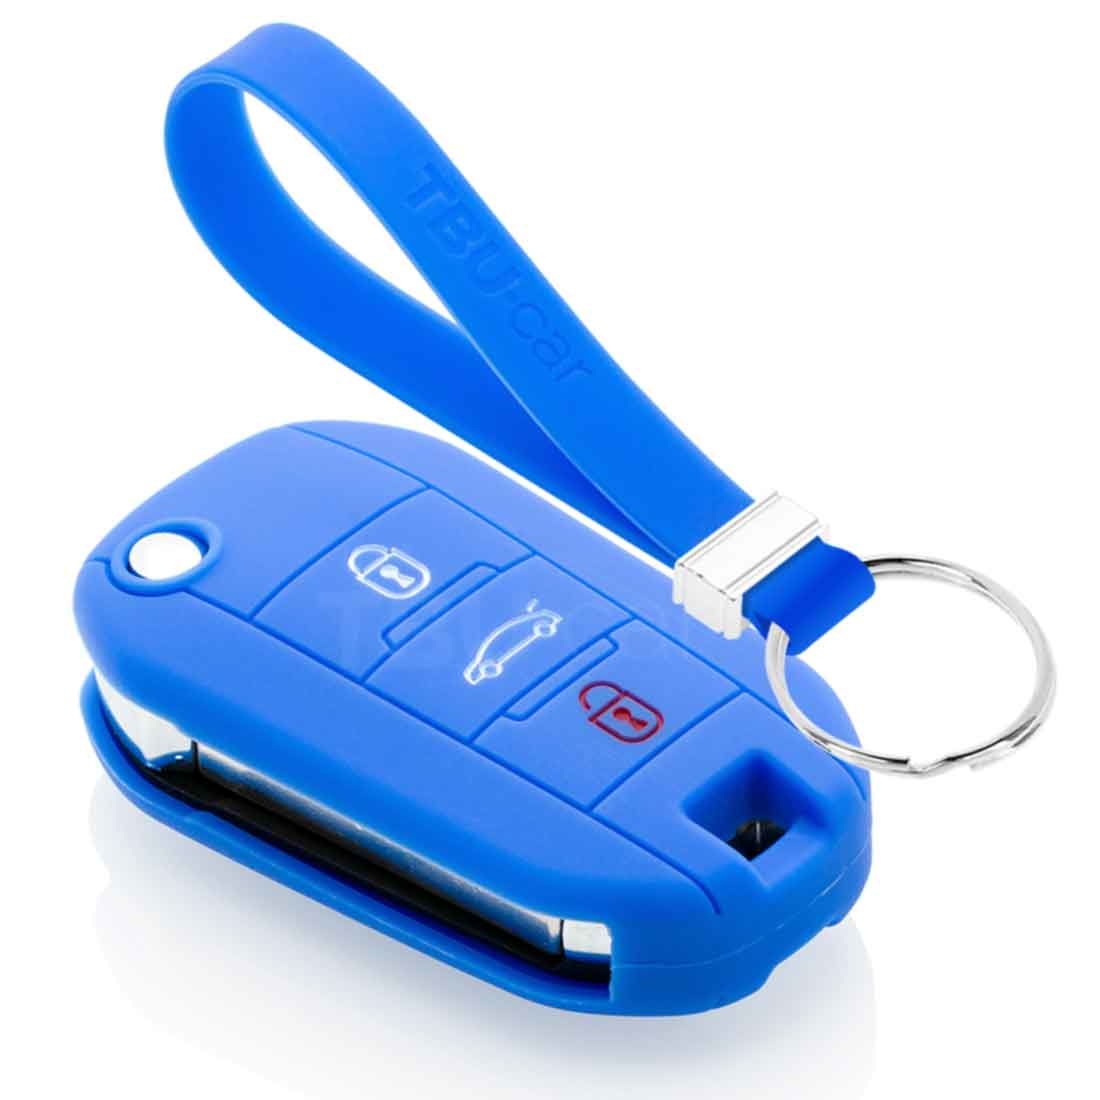 TBU car TBU car Autoschlüssel Hülle kompatibel mit Opel 3 Tasten - Schutzhülle aus Silikon - Auto Schlüsselhülle Cover in Blau